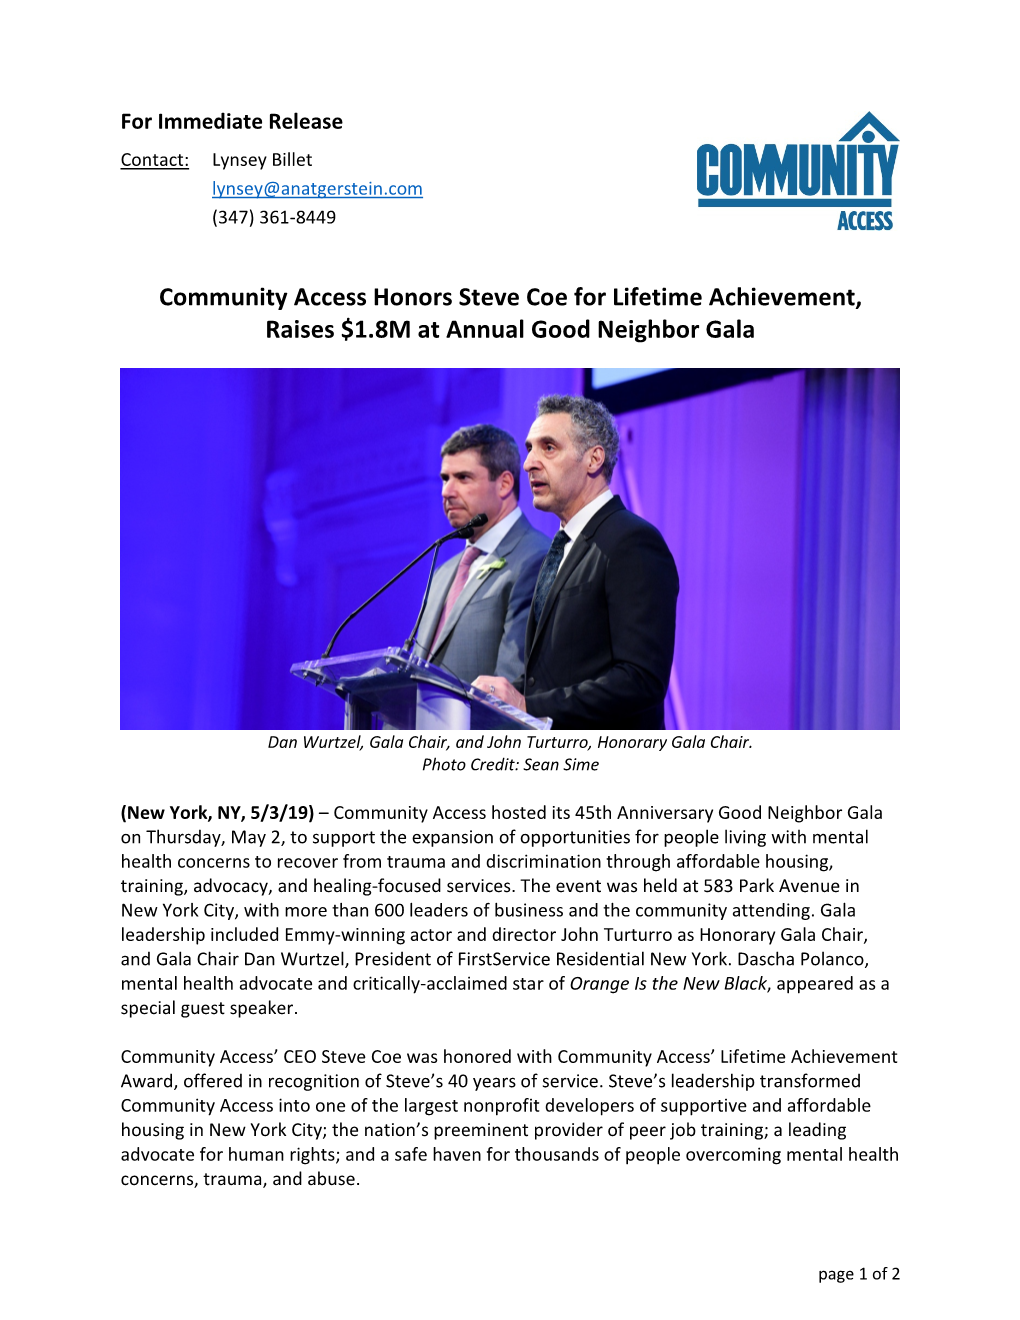 Community Access Honors Steve Coe for Lifetime Achievement, Raises $1.8M at Annual Good Neighbor Gala